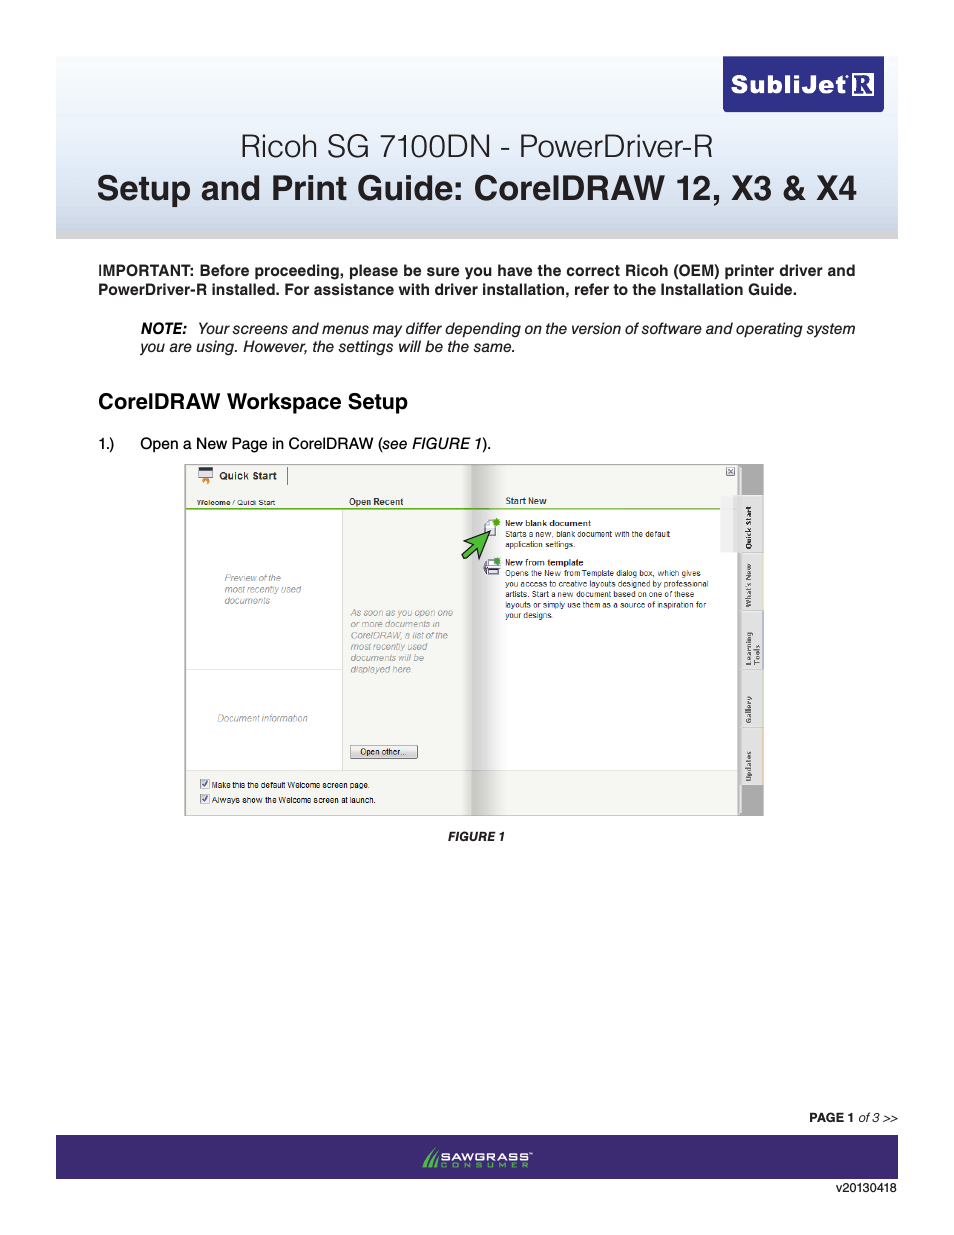 SubliJet R Ricoh SG7100DN (Windows Power Driver Setup): Print & Setup Guide CorelDRAW 12 - X4